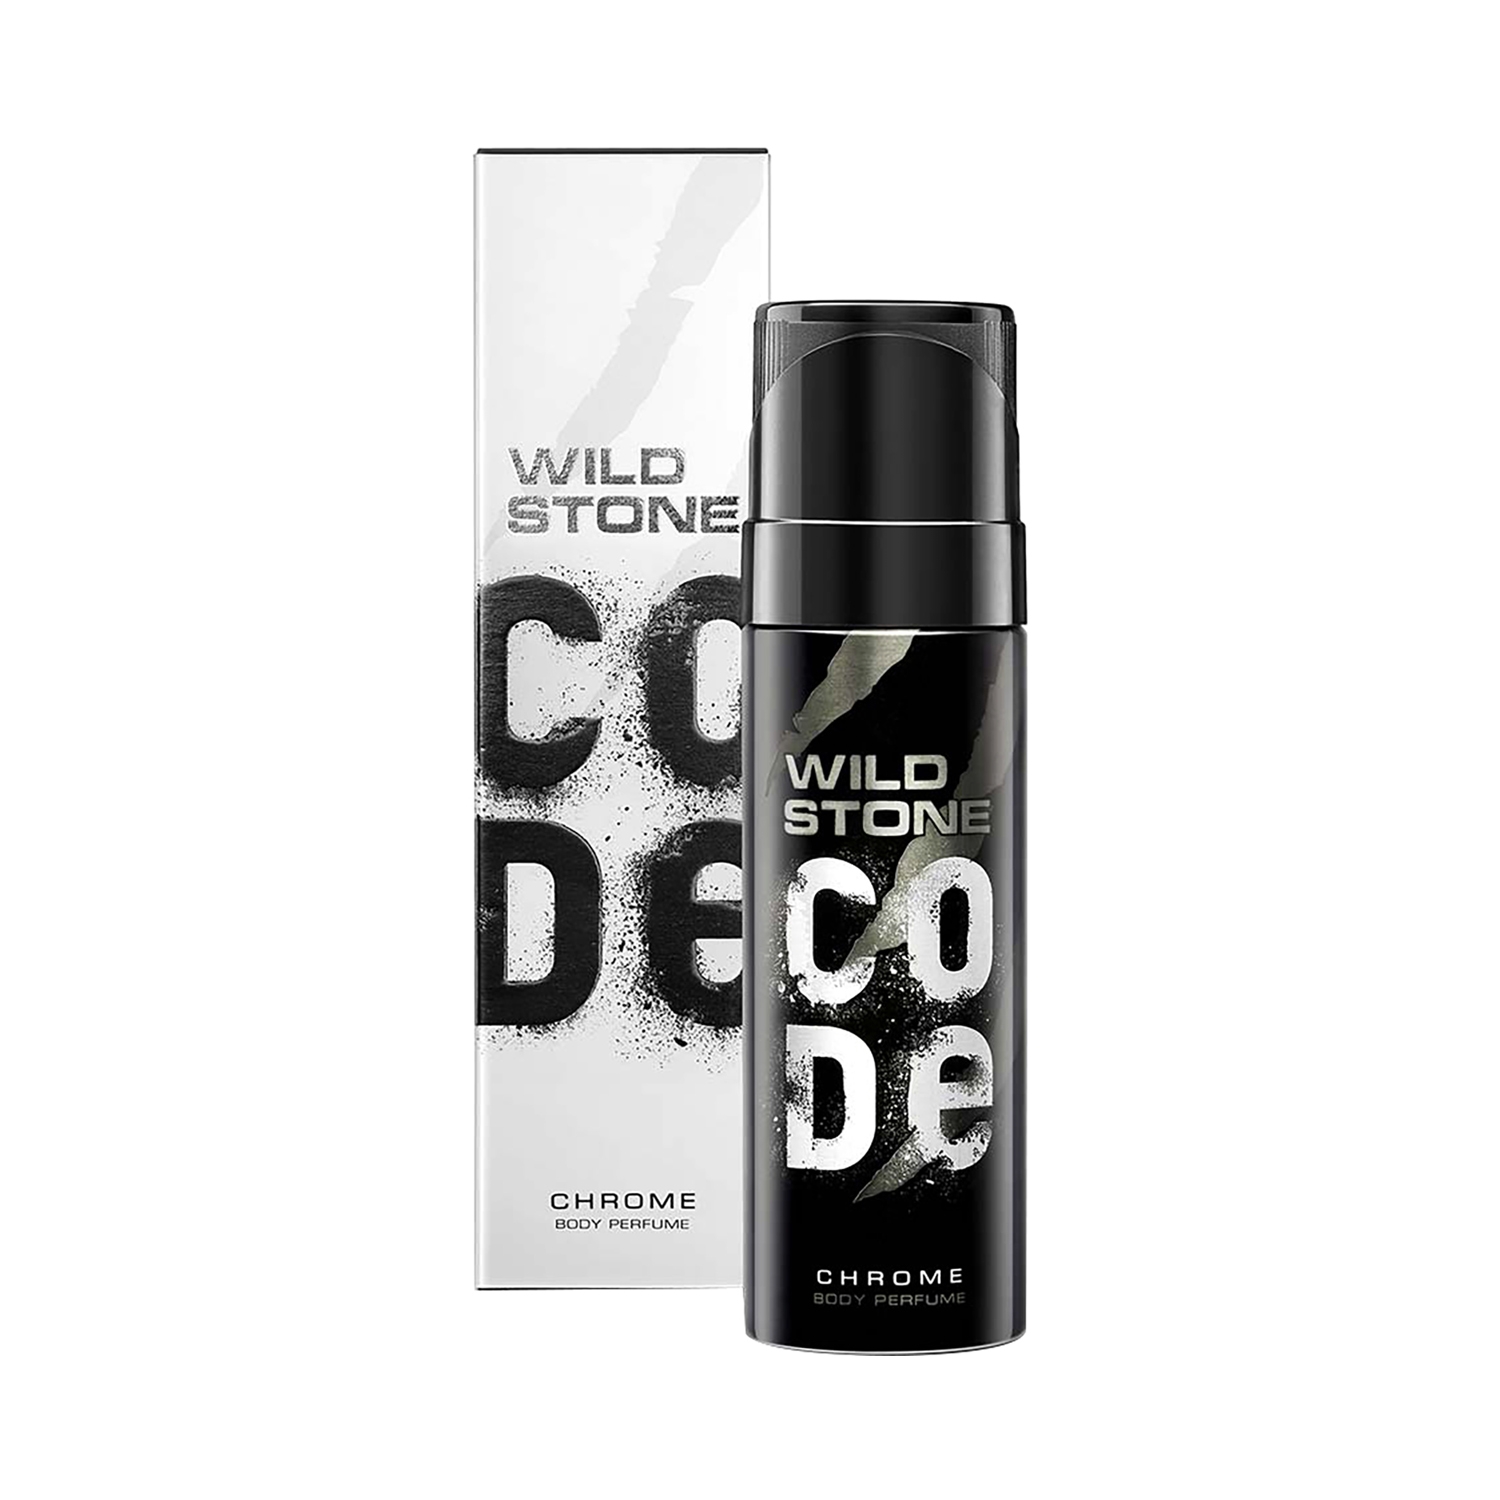 Wild Stone Code Chrome No Gas Deodorant Body Perfume (150ml)